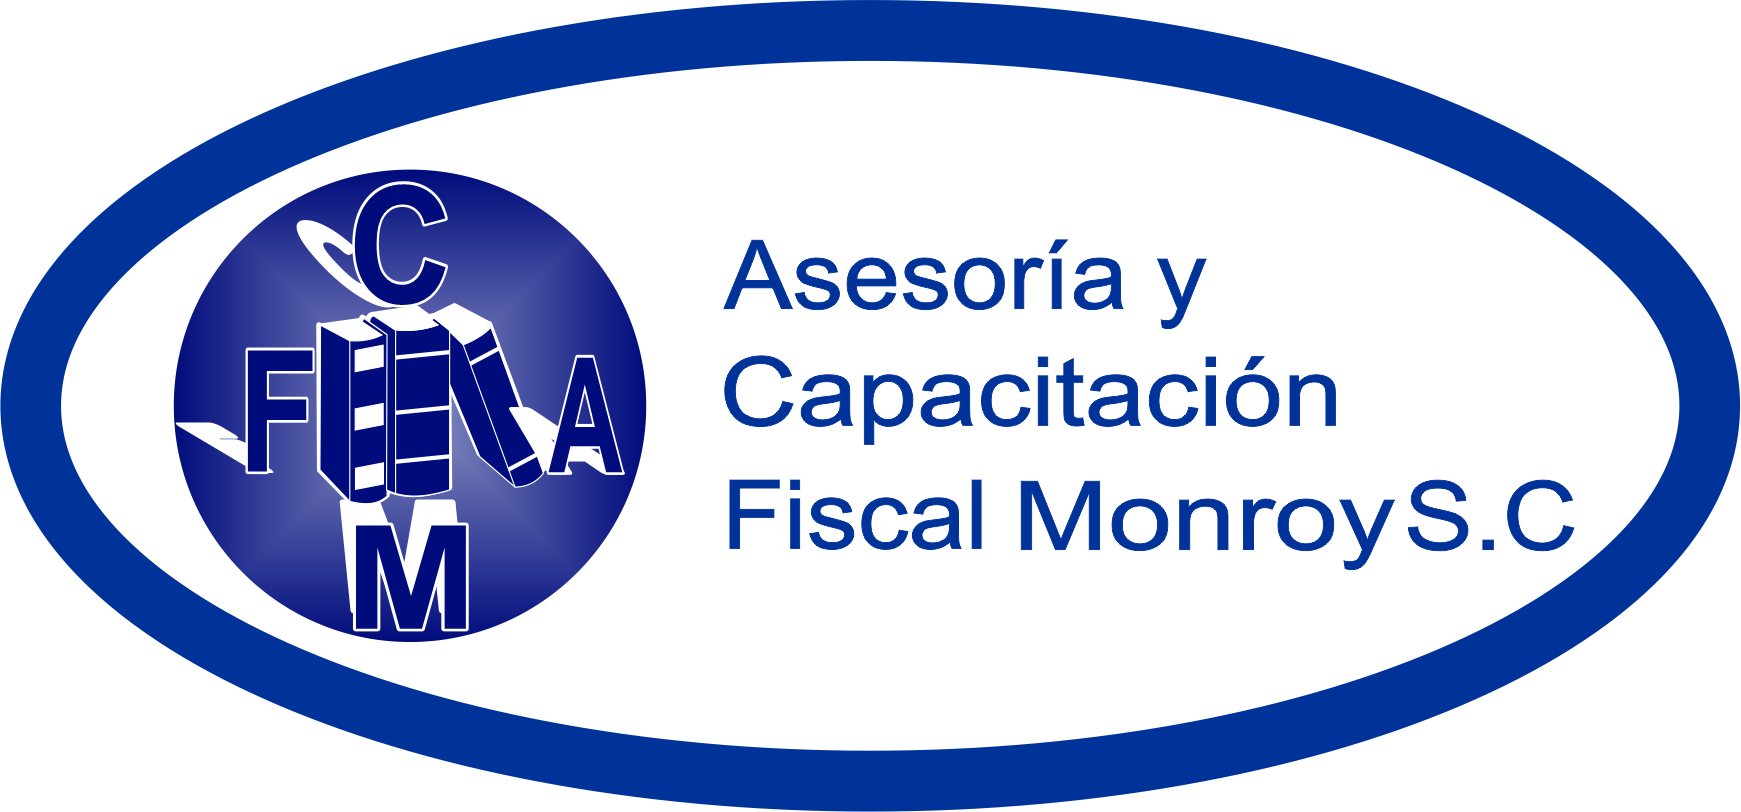 Asesorí­a y Capacitación Fiscal Monroy S.C.